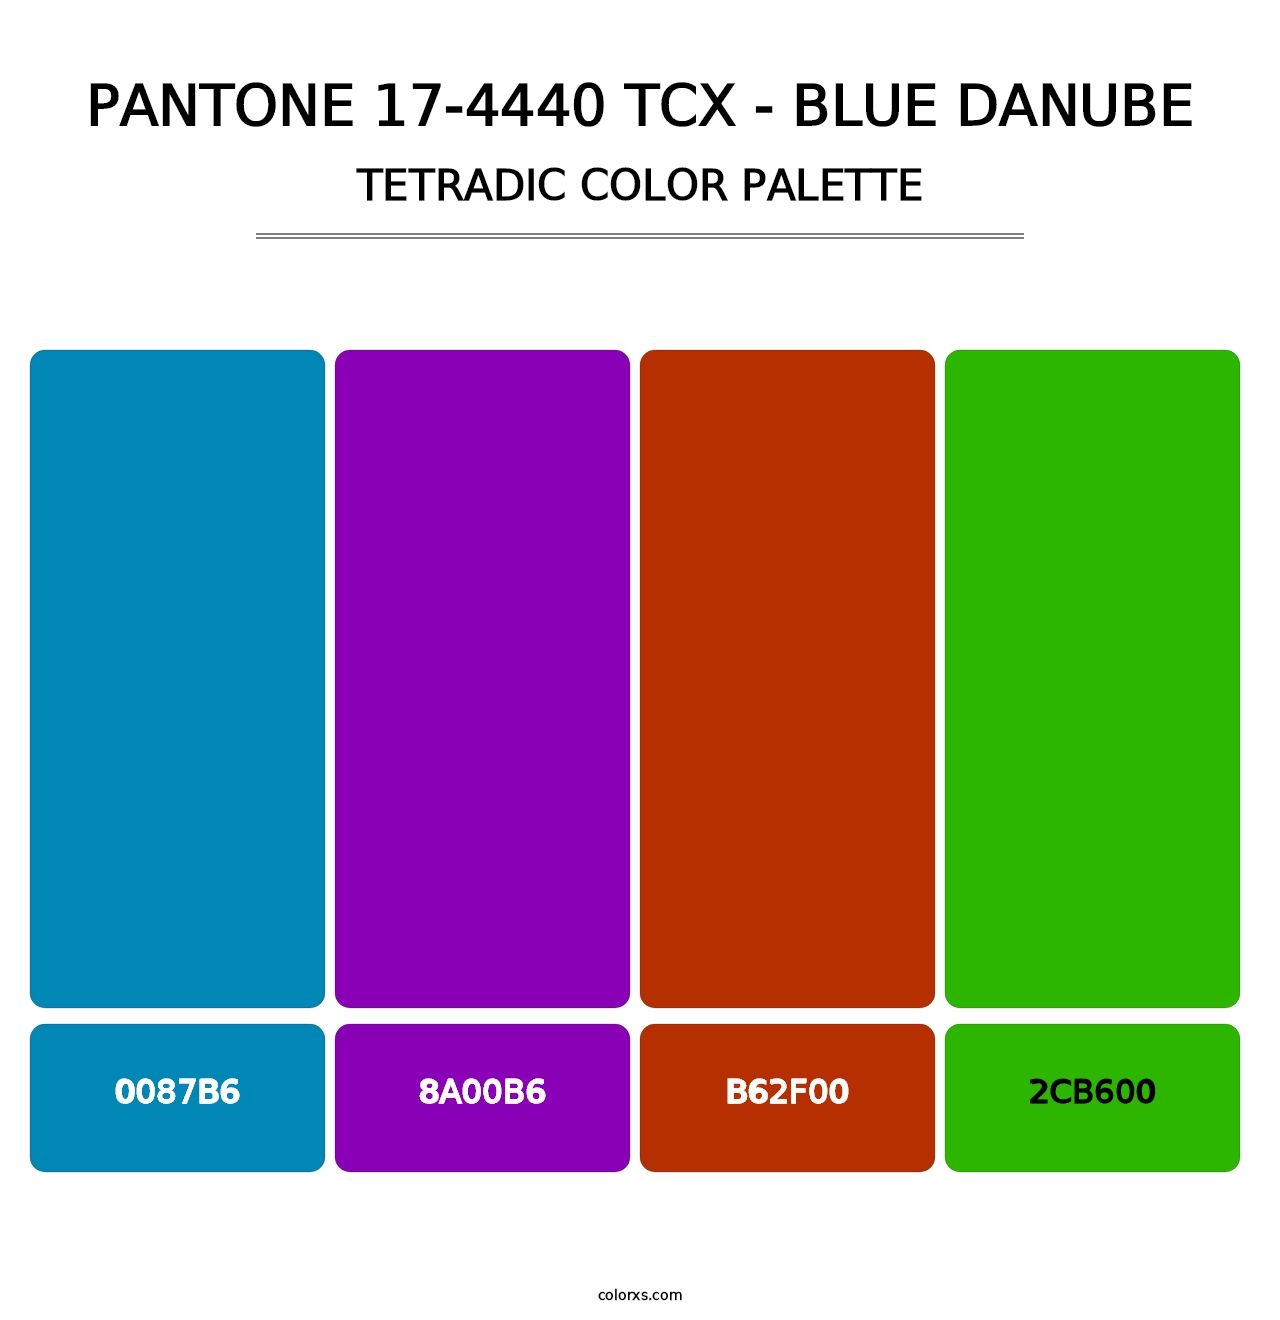 PANTONE 17-4440 TCX - Blue Danube - Tetradic Color Palette